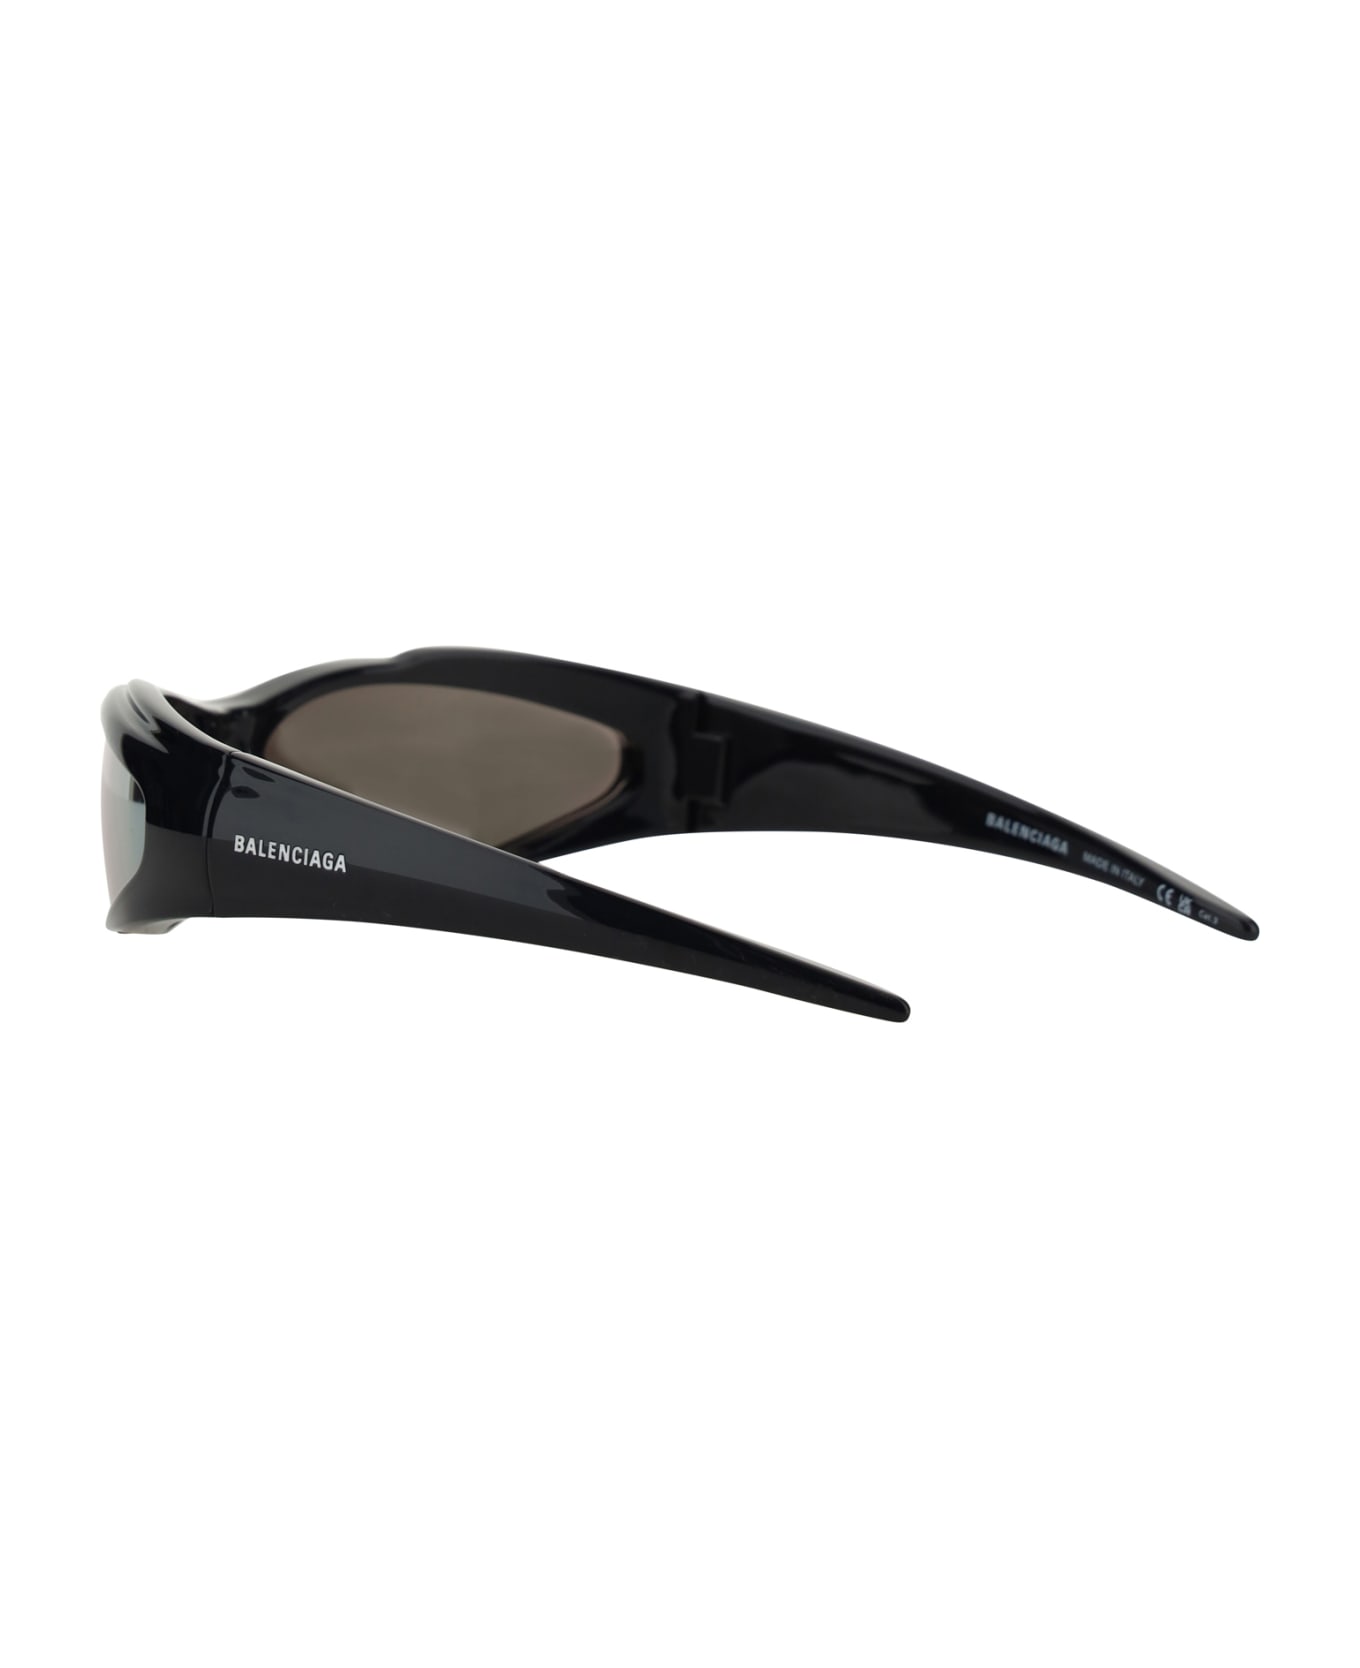 Balenciaga Eyewear Reverse Xpander Rectangle Sunglasses - Black/mirrorsilver